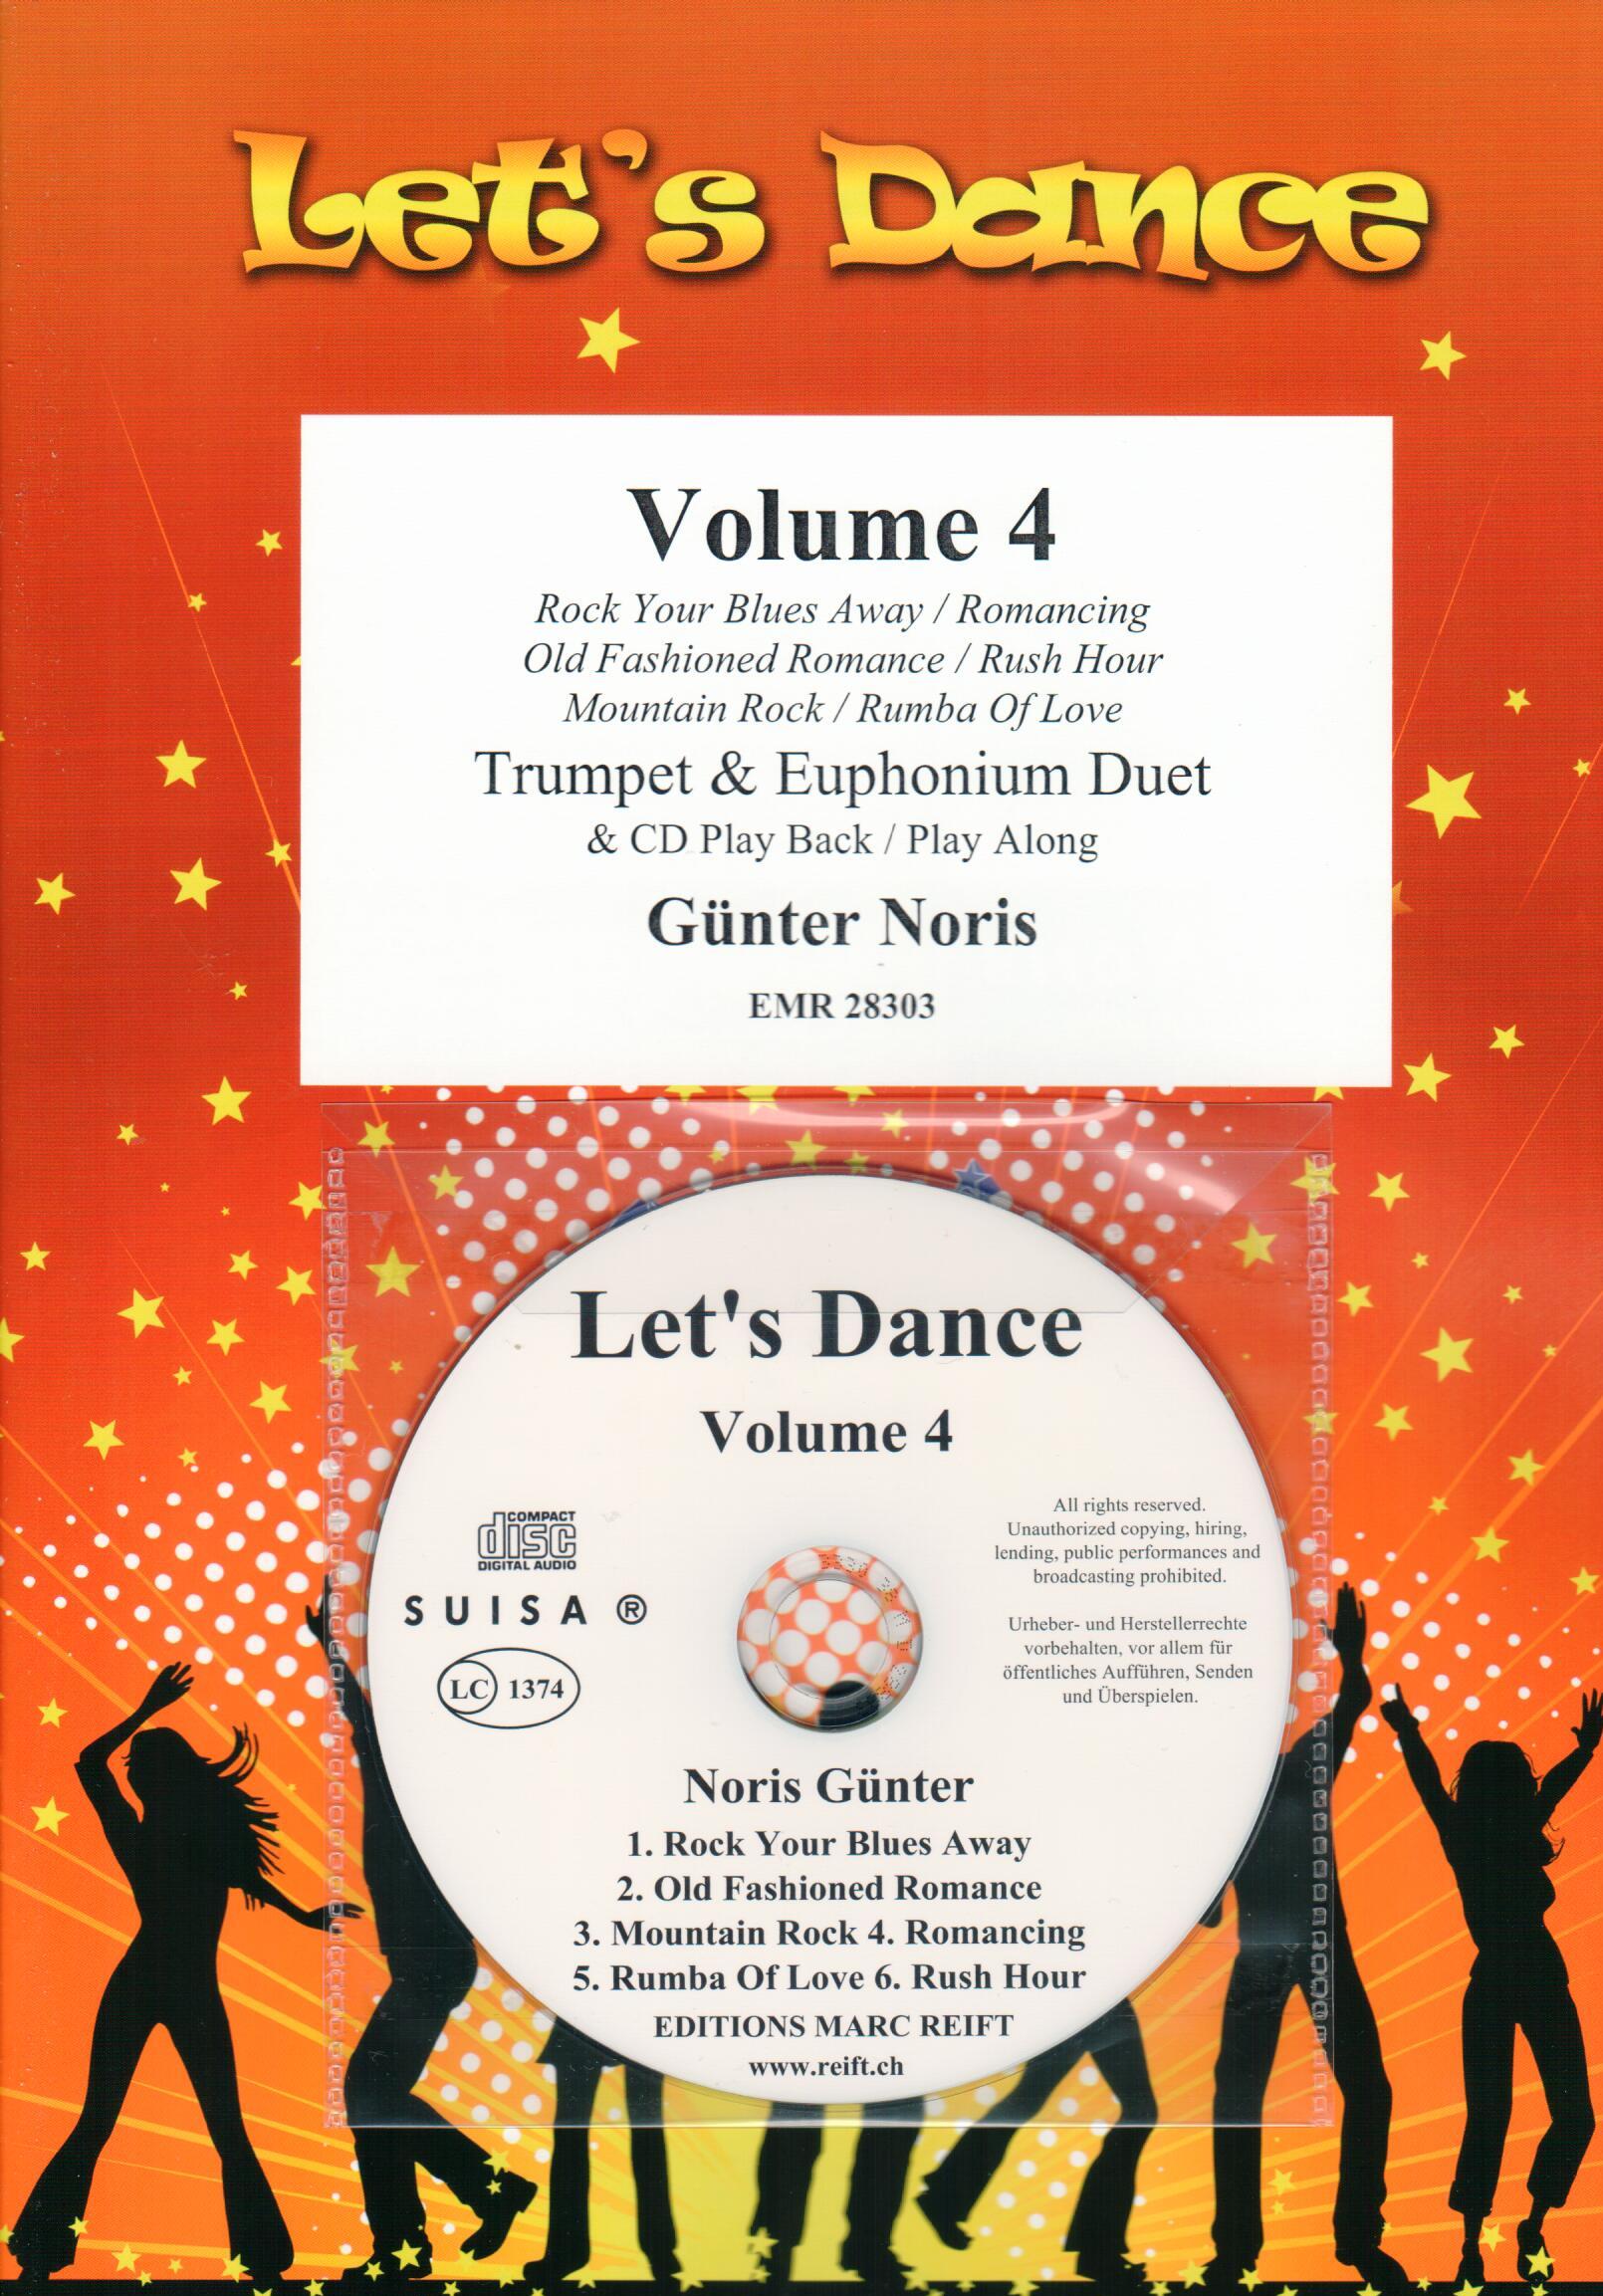 LET'S DANCE VOLUME 4, Duets